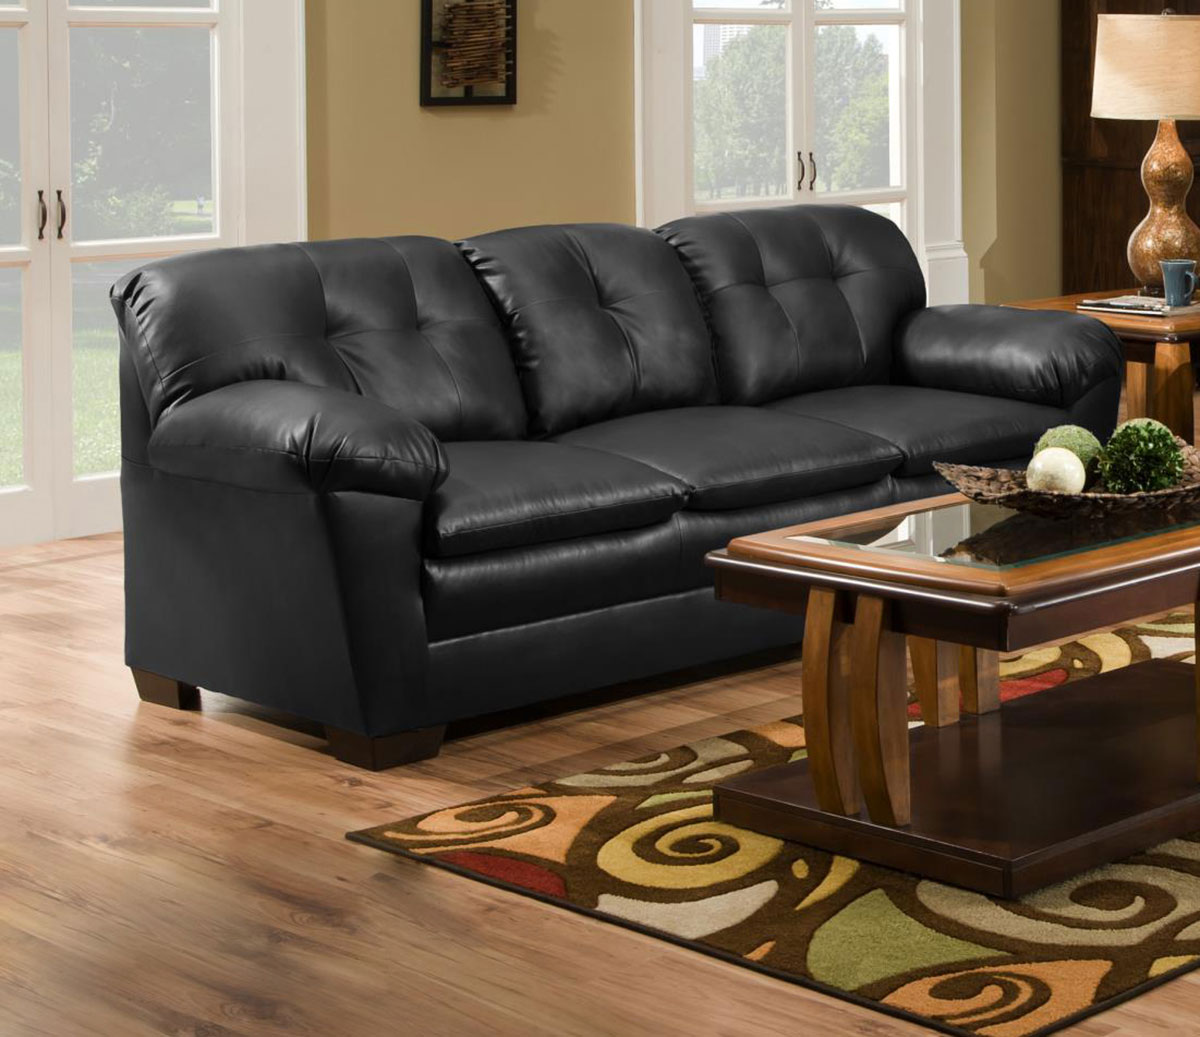 Chelsea Home Clover Sofa Set - Black